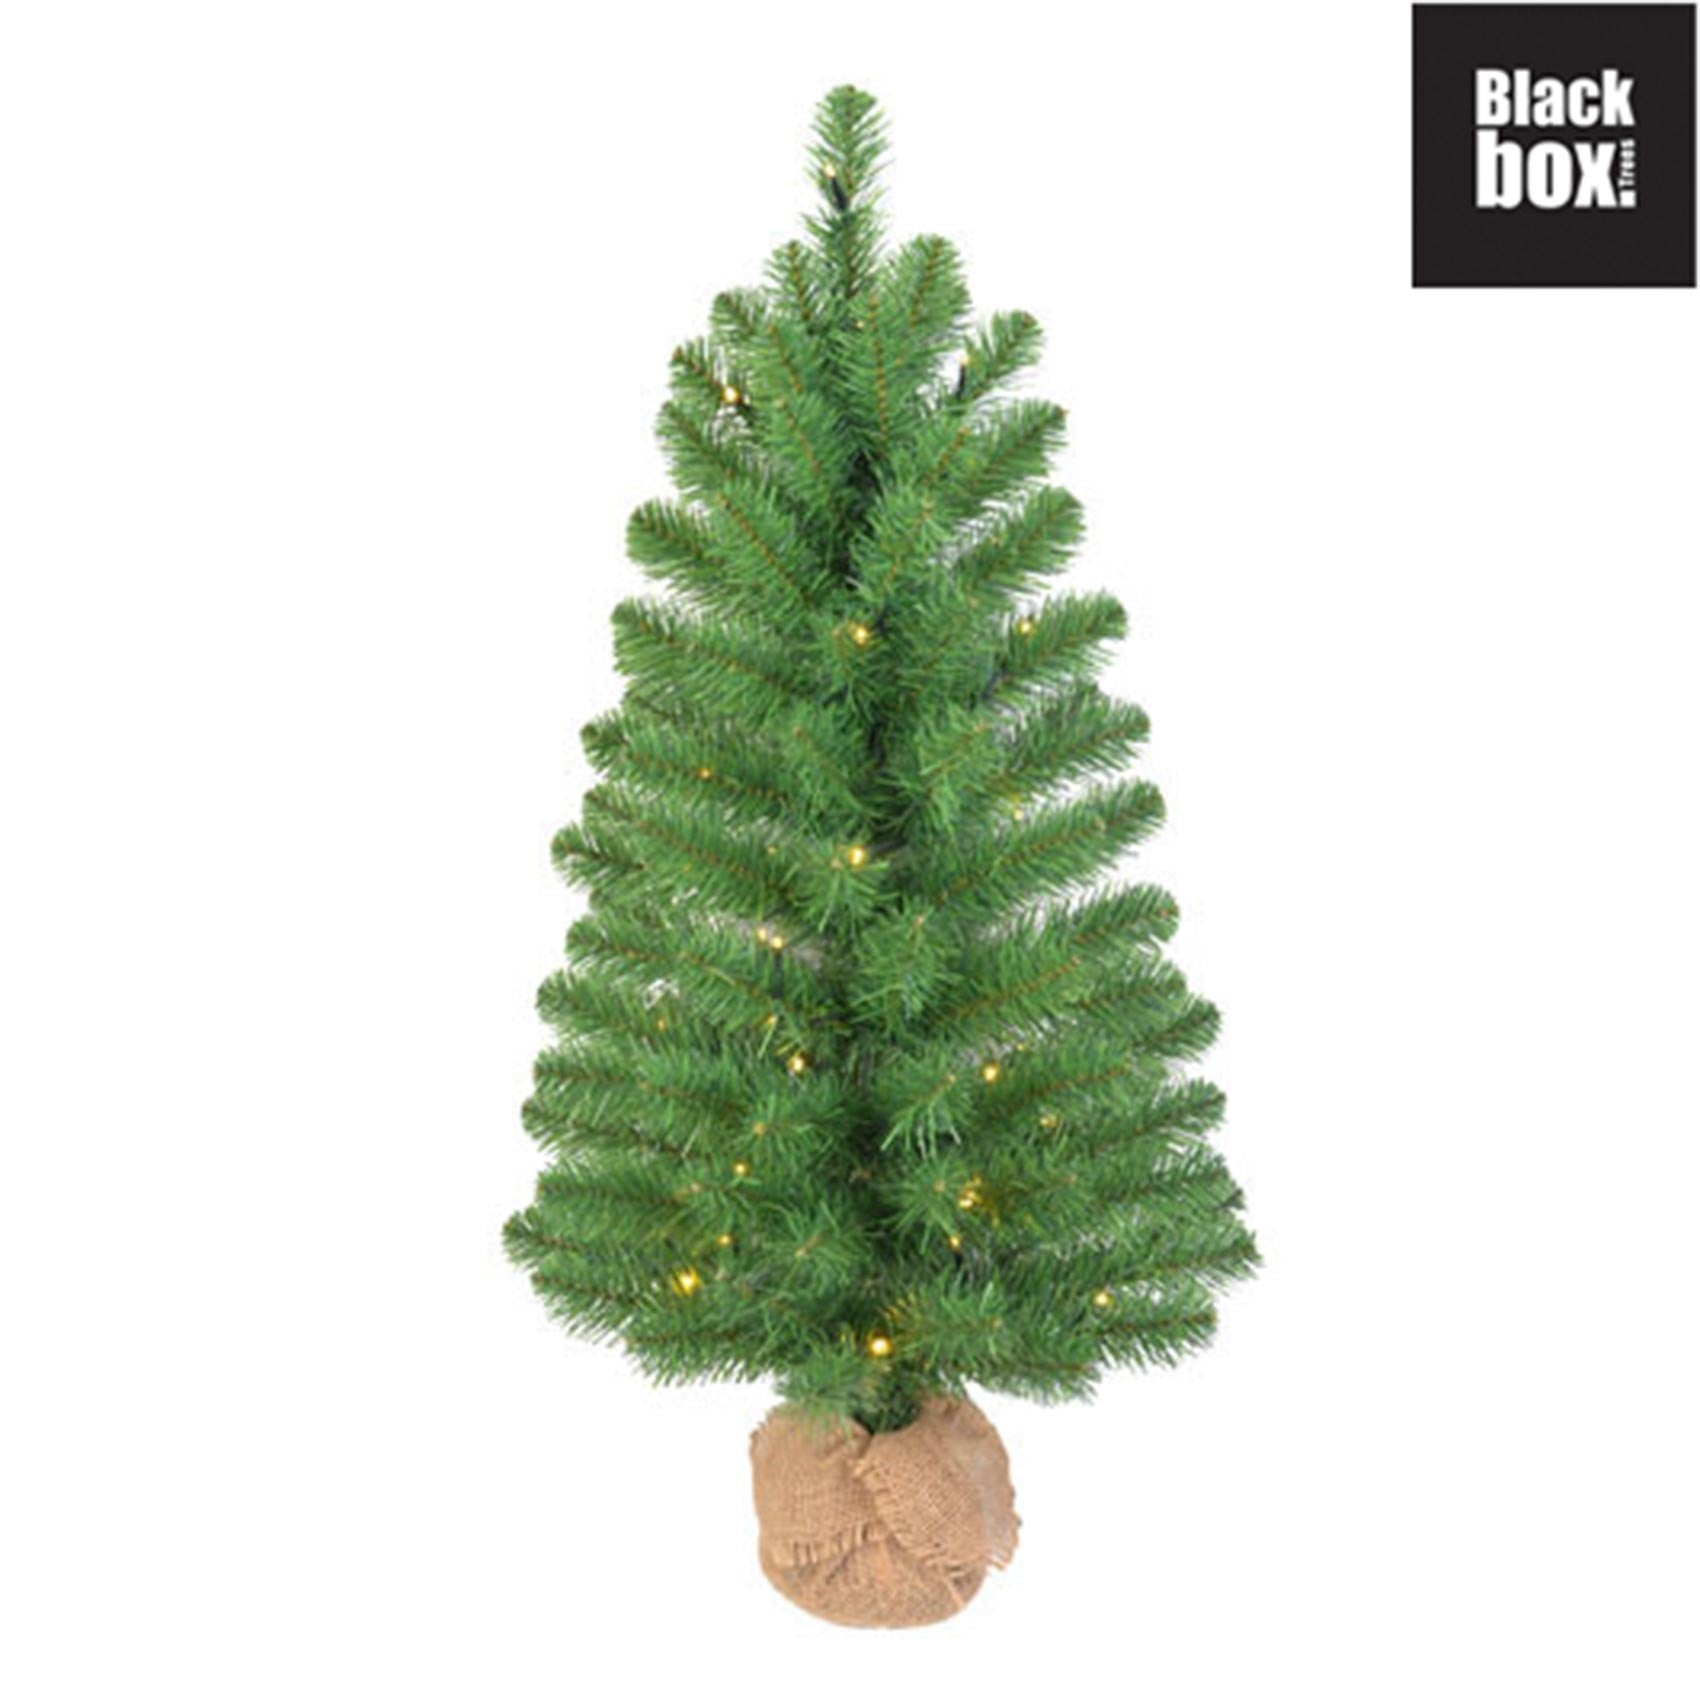 Black box arbre de noël artificiel roundstone - 33x33x60 cm - pvc - blanc